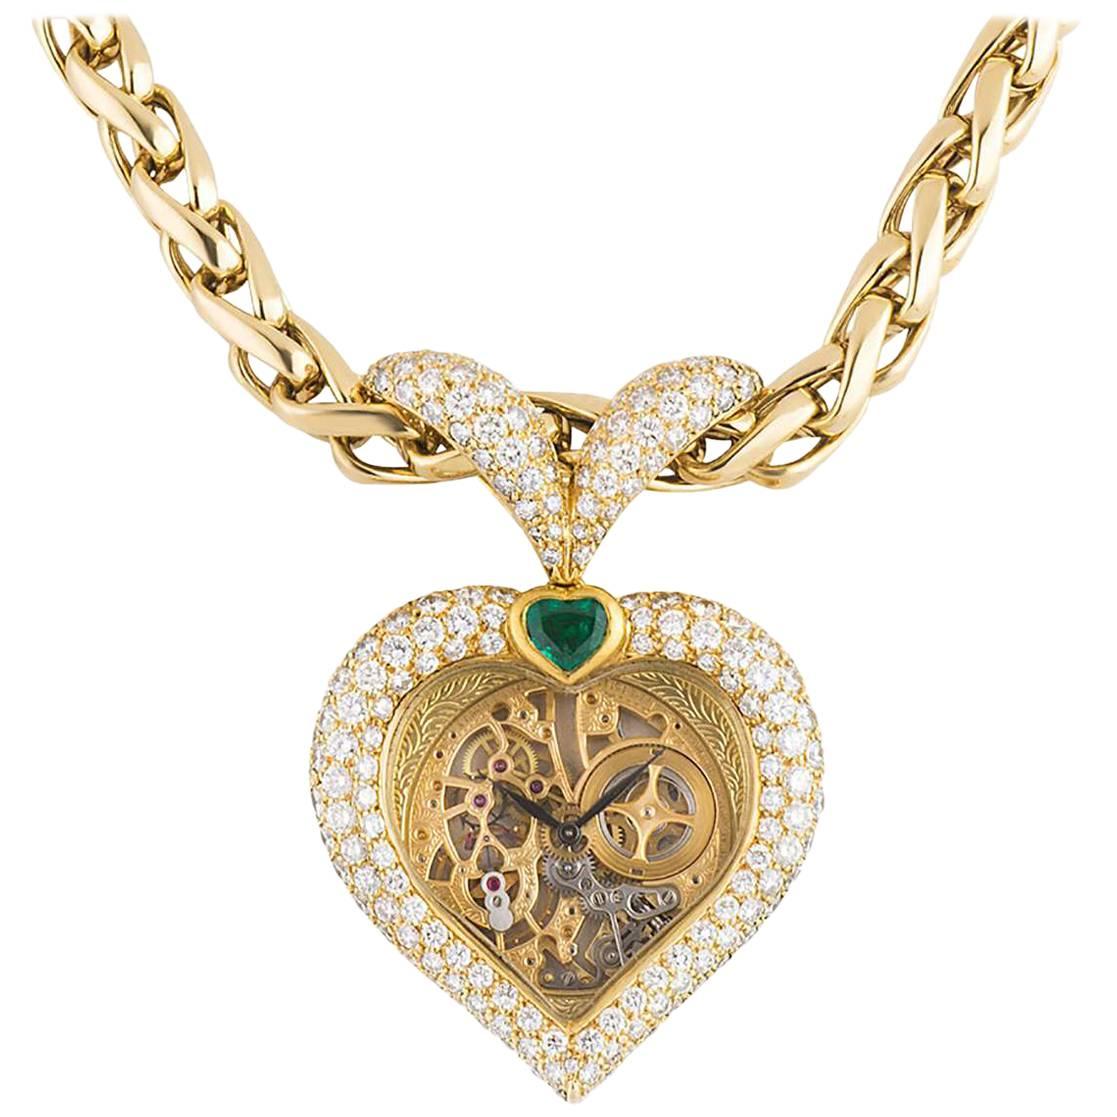 Audemars Piguet Diamond and Emerald Pendant Watch Necklace